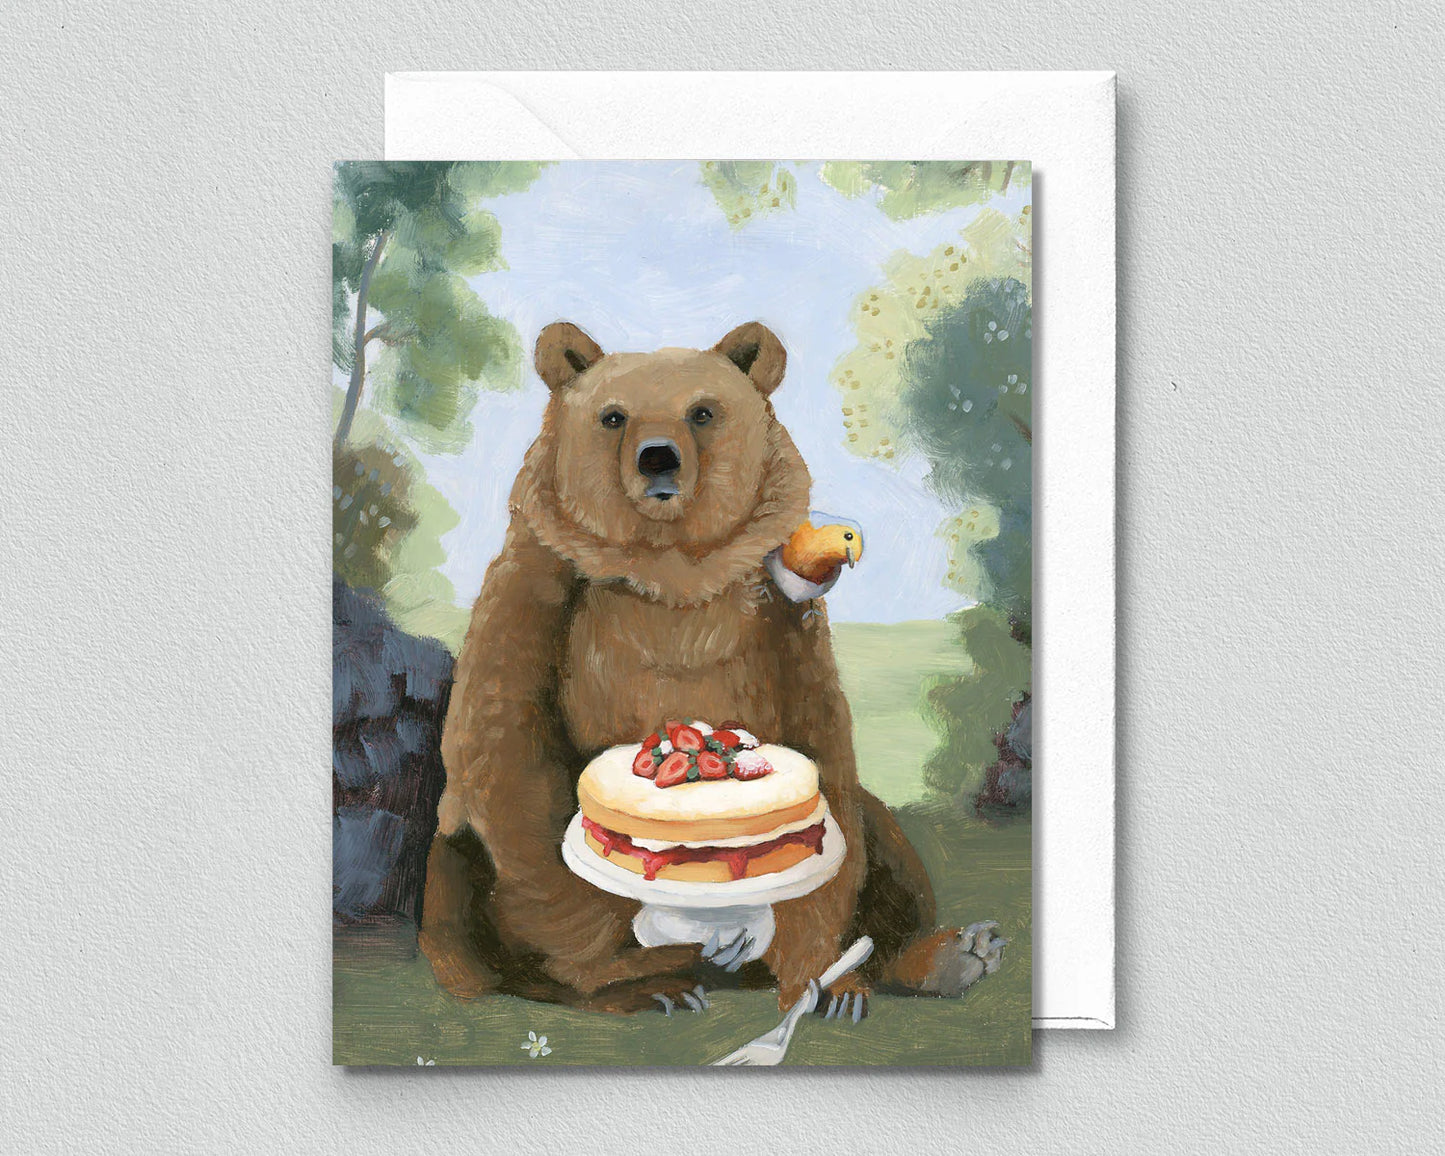 Bear with Victoria Sandwich Cake Greeting Card (blank inside) by Kim Ferreira (Joie de Vivre)